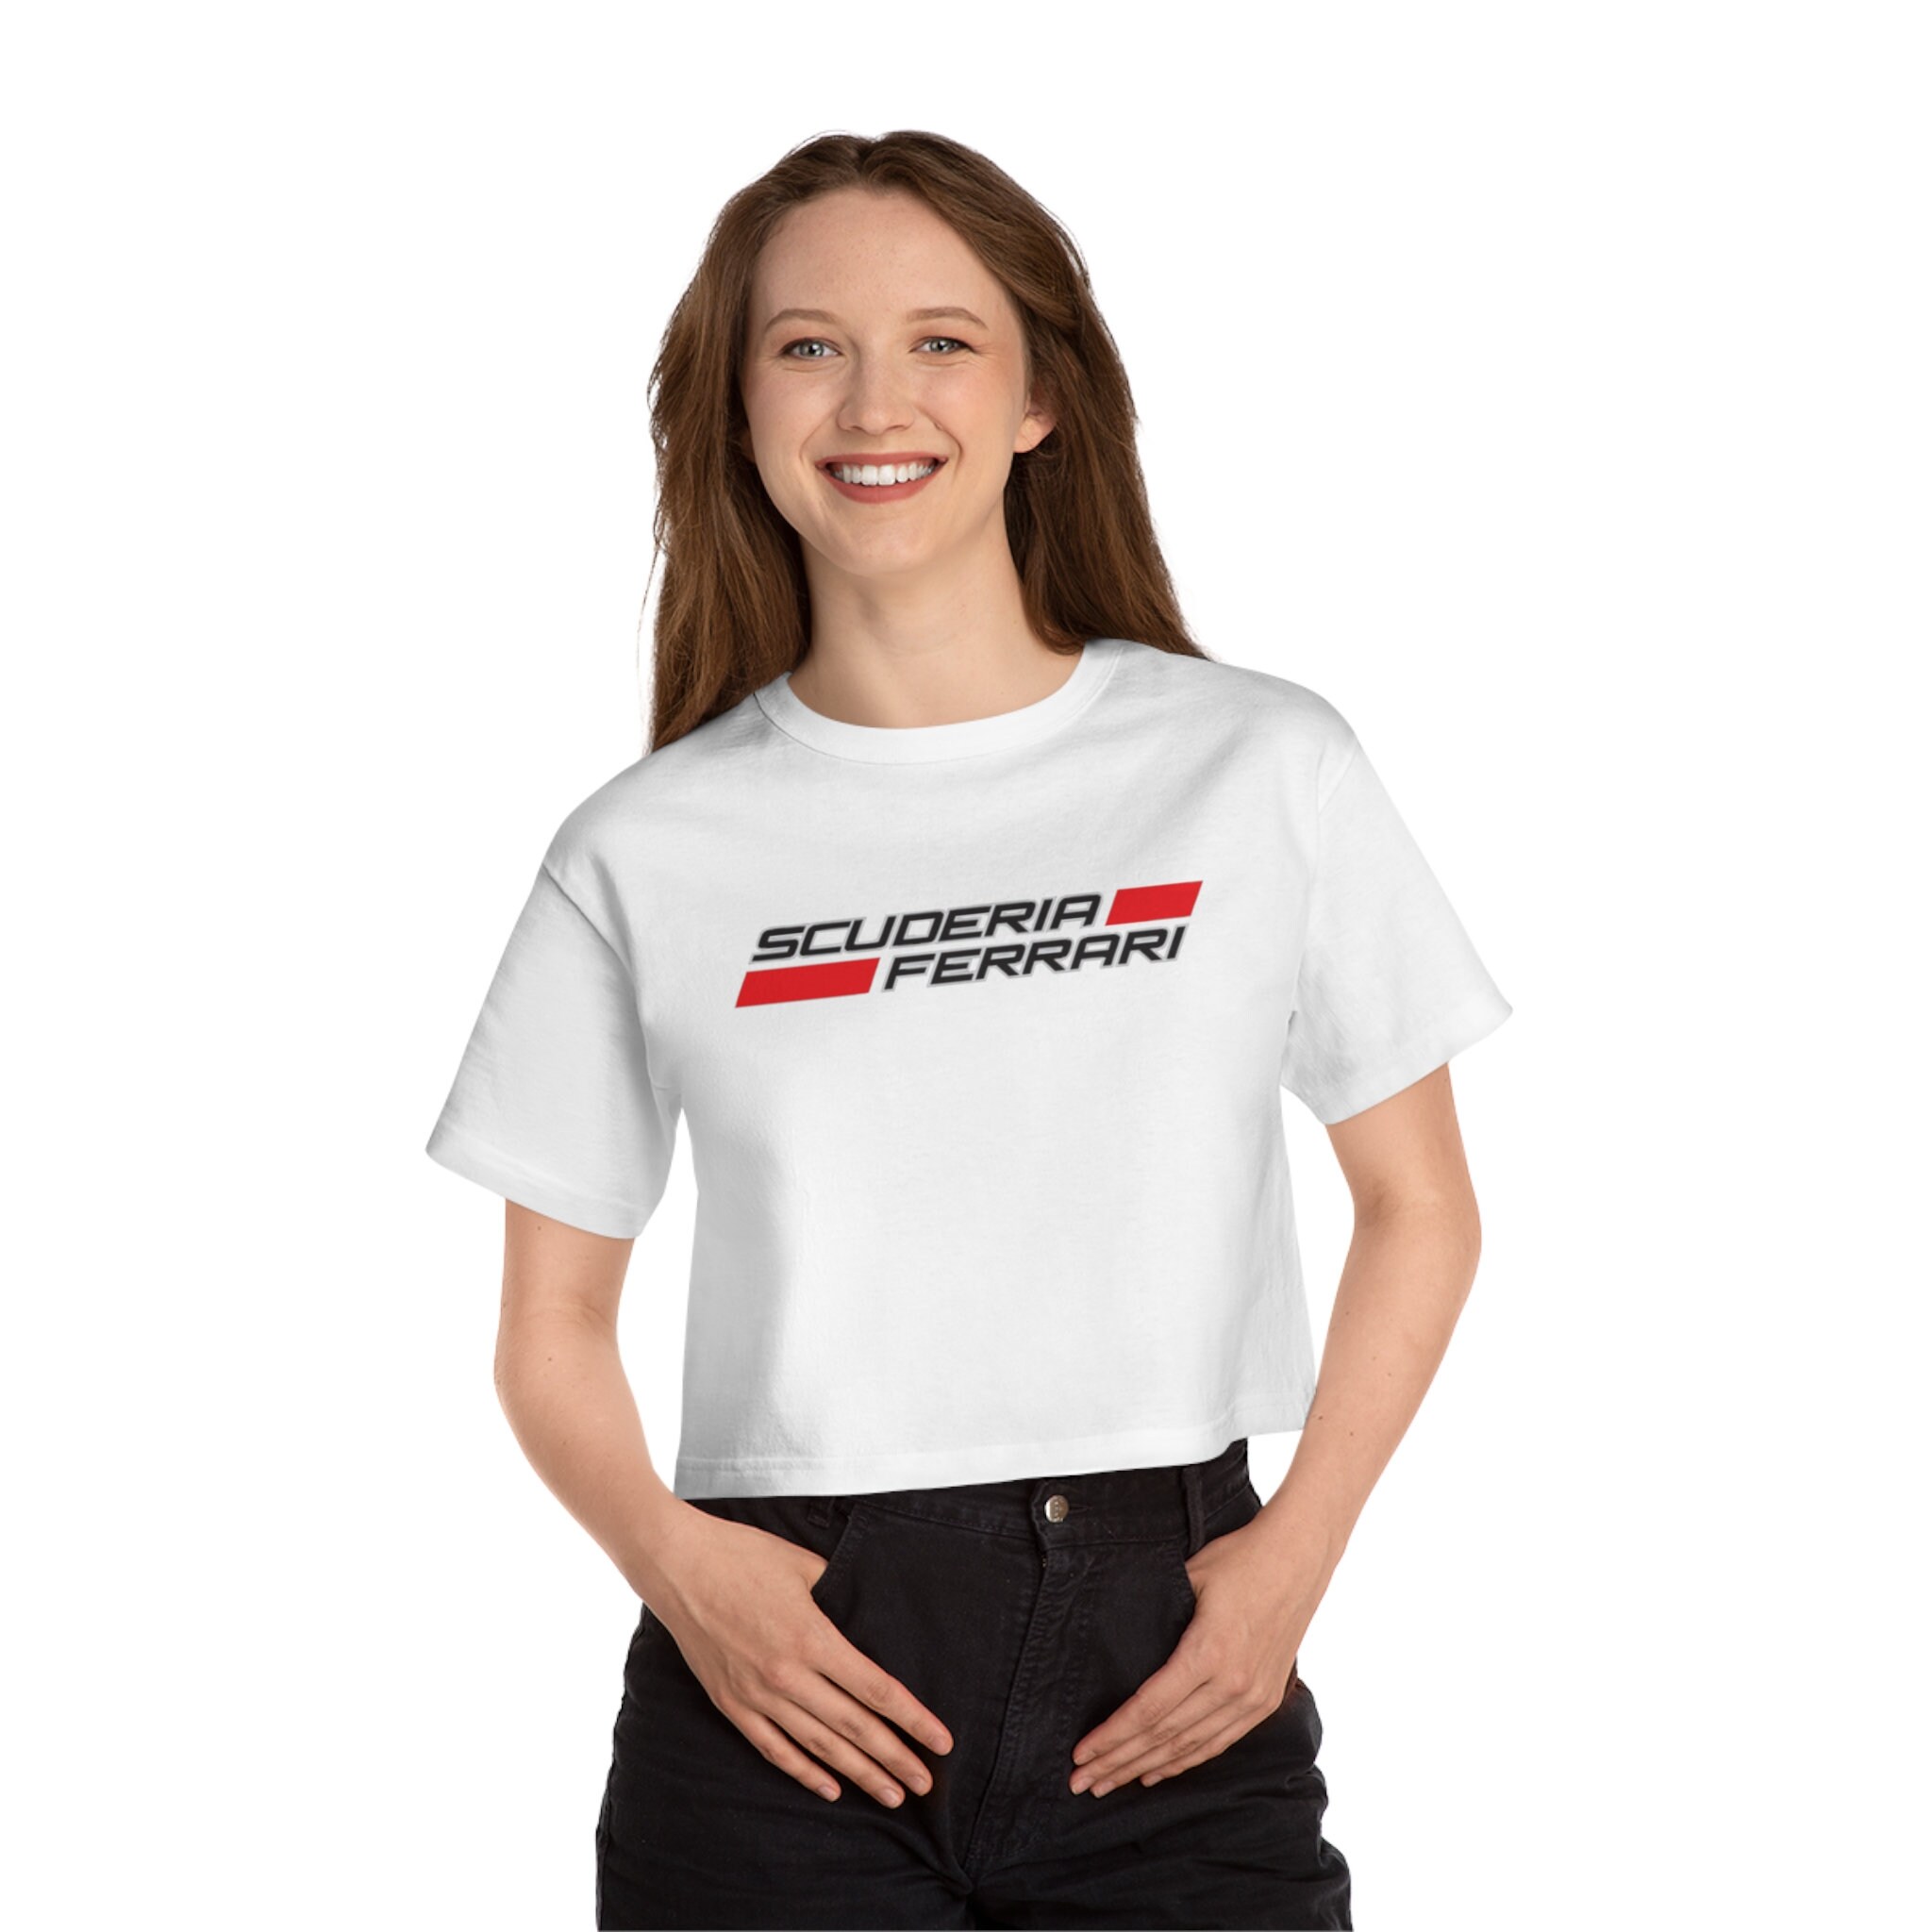 Women's Champion Cropped Ferrari Shirt, Tee, F1, Formula 1, Gift